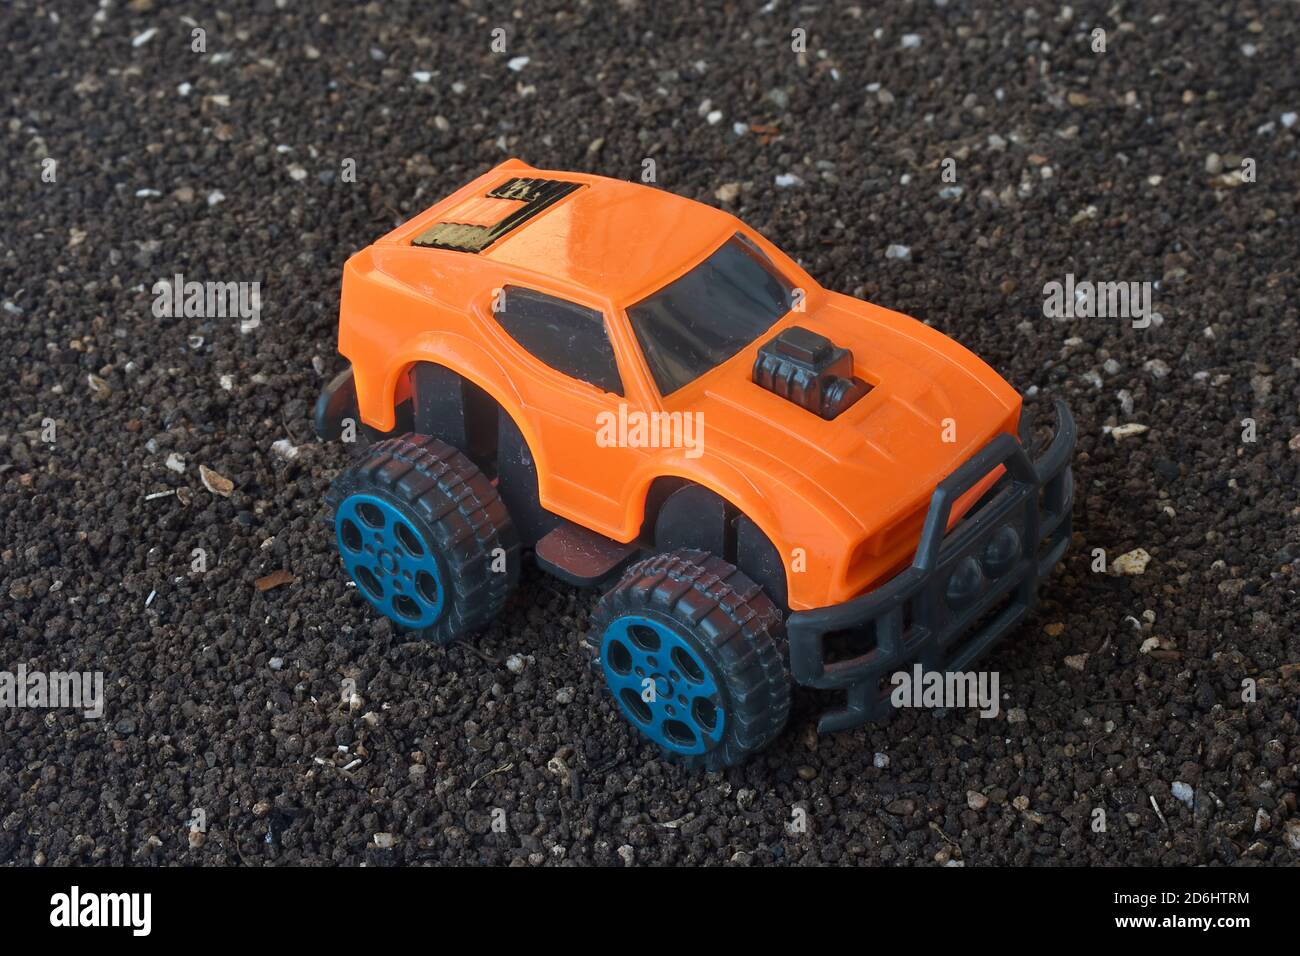 Plastic orange 4x4 car toy on dirt ground,  mini suv vehicle. Stock Photo